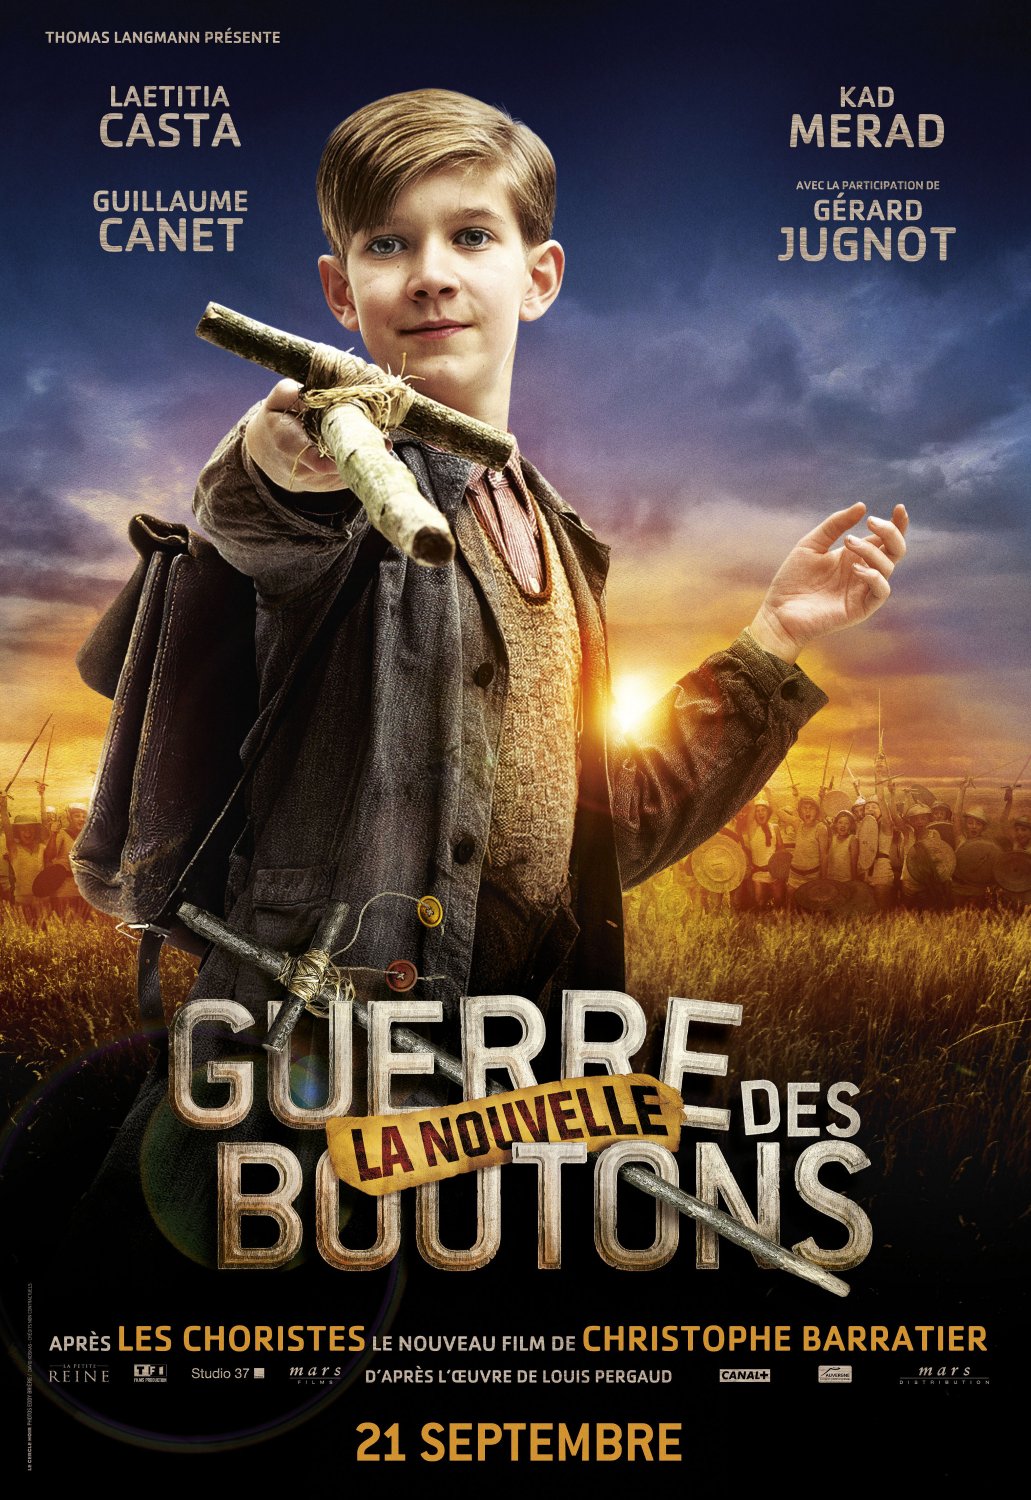 La guerre des boutons (#5 of 12): Extra Large Movie Poster Image - IMP ...